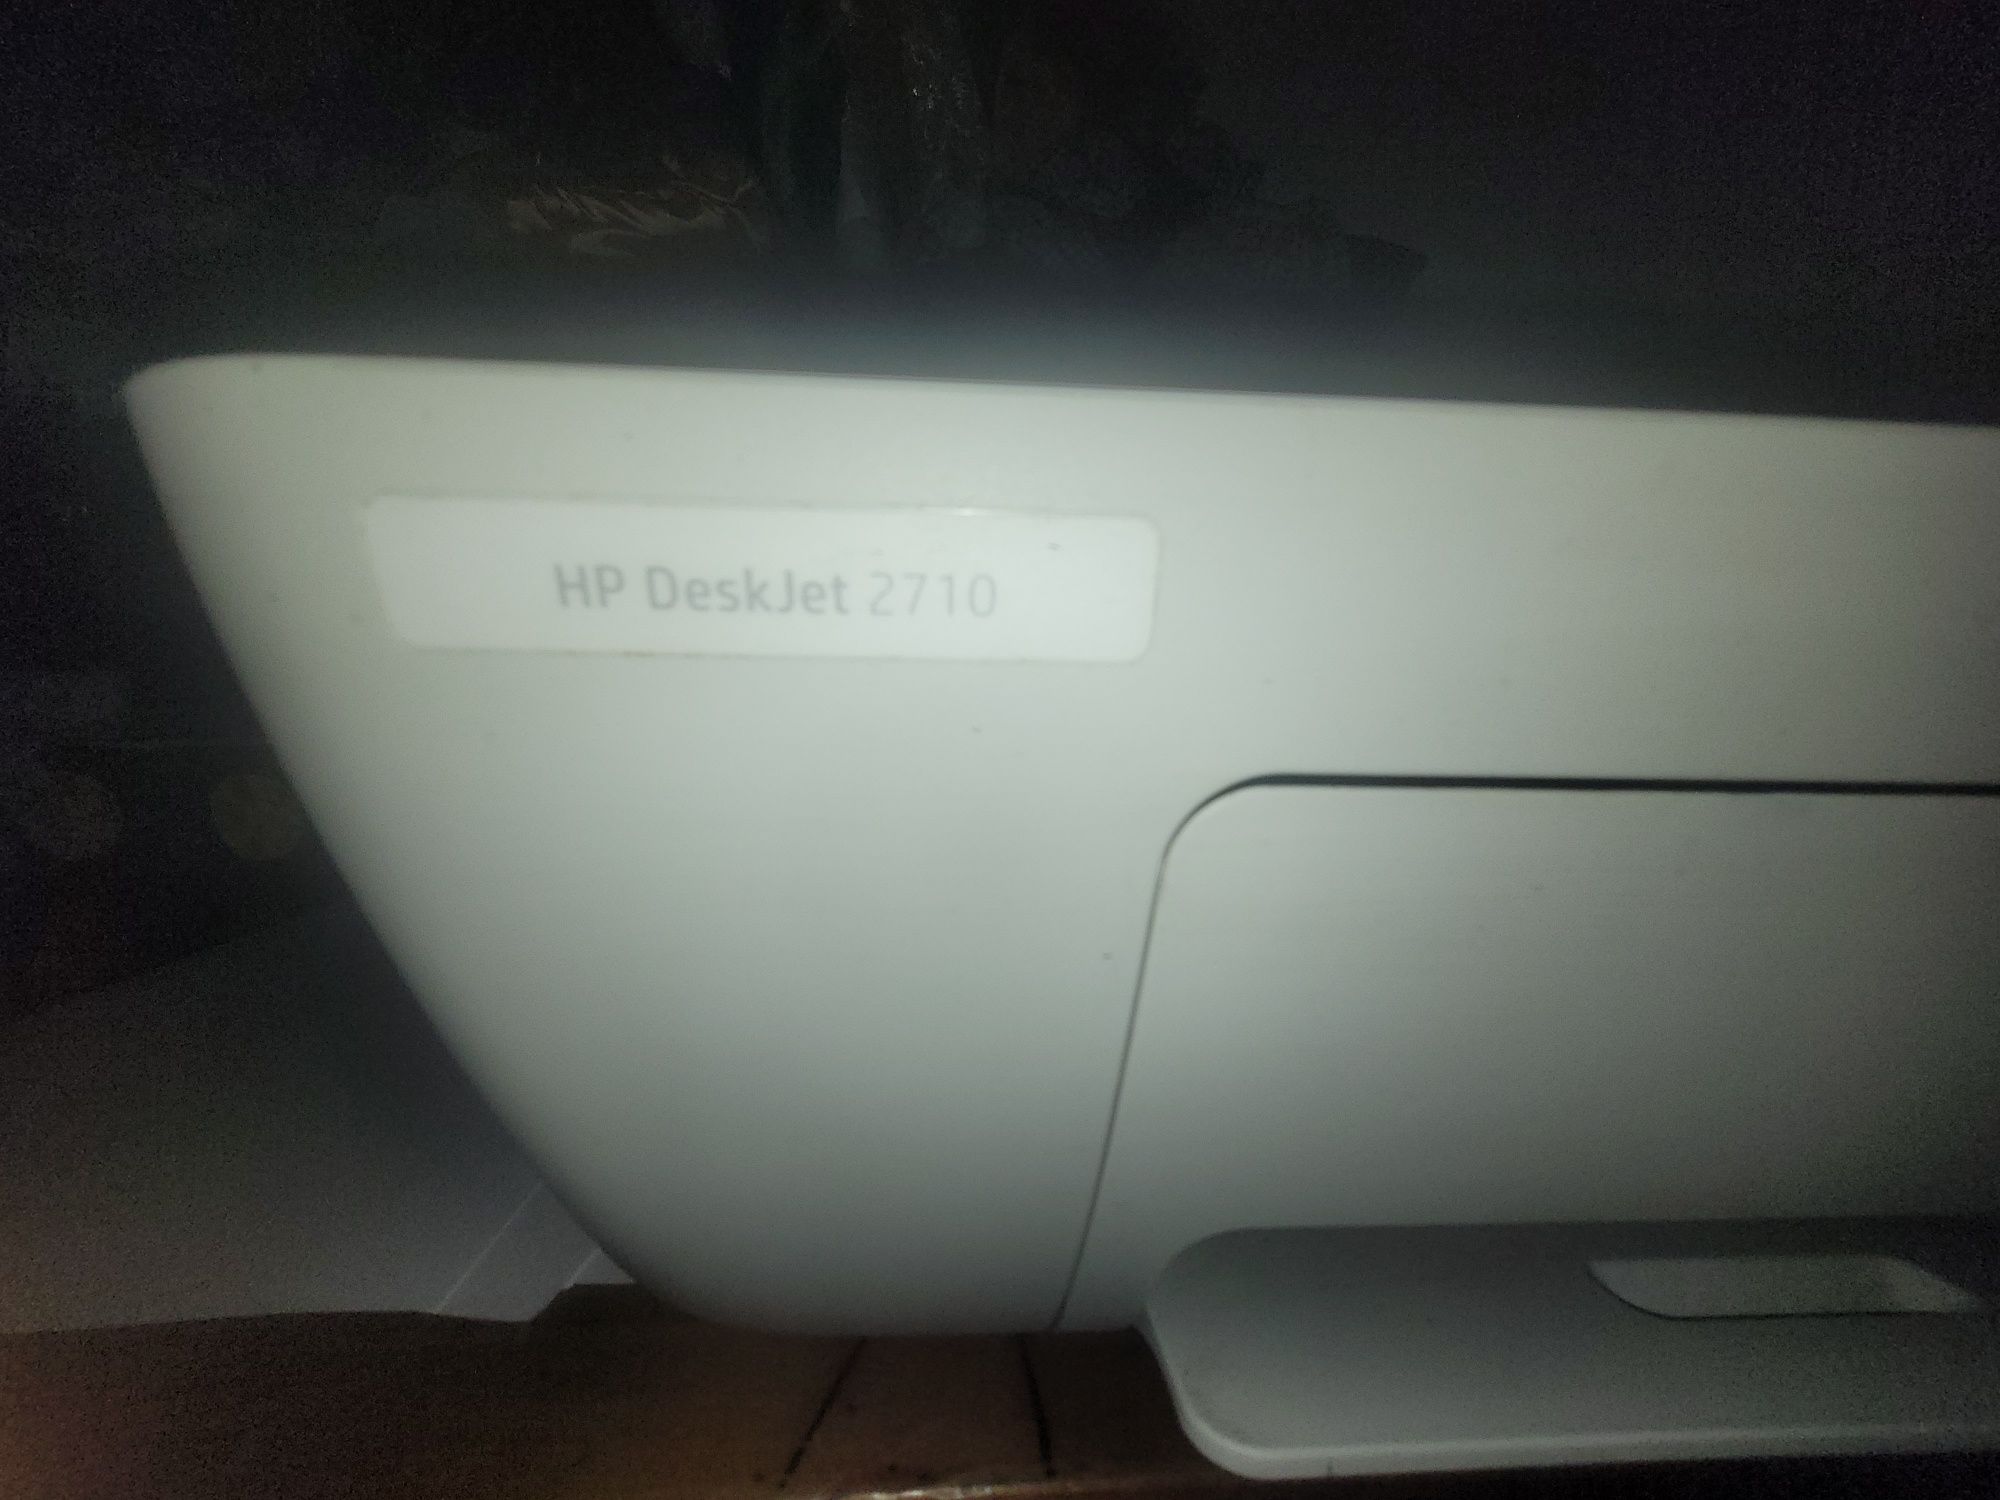 Drukarką HP Deskjet 2710